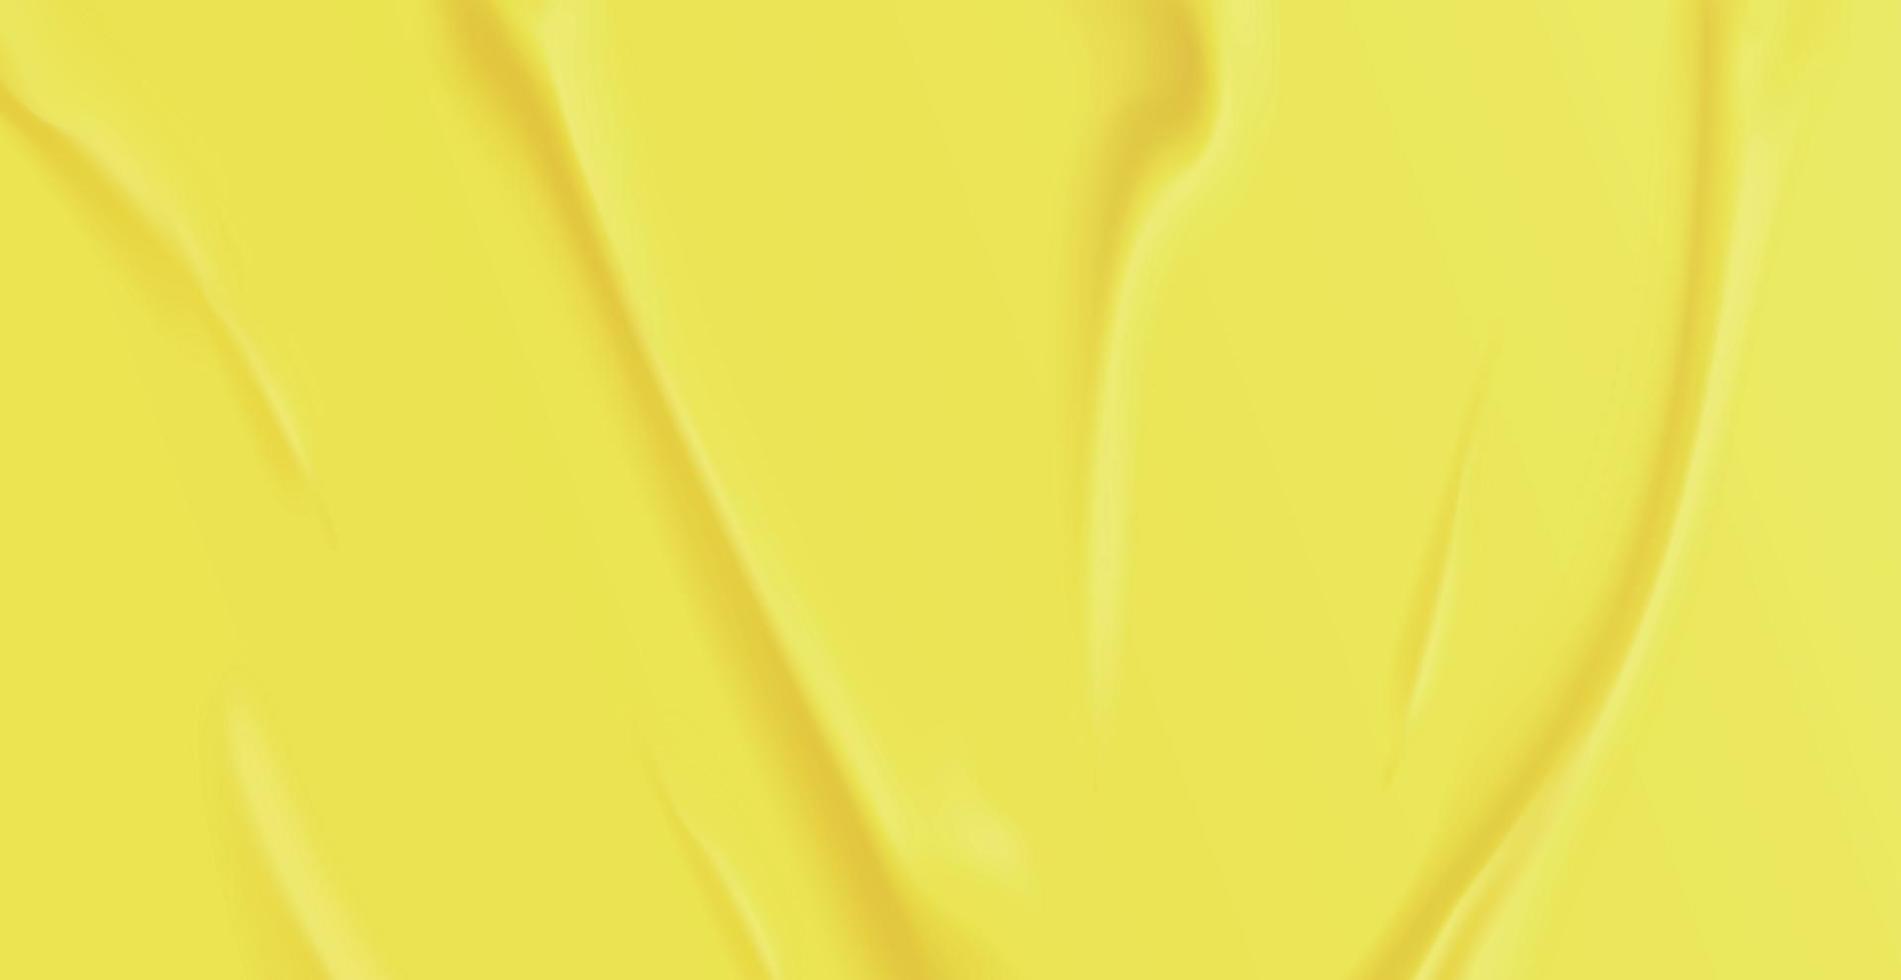 textura realista de fundo amarelo amassado, dobras - vetor